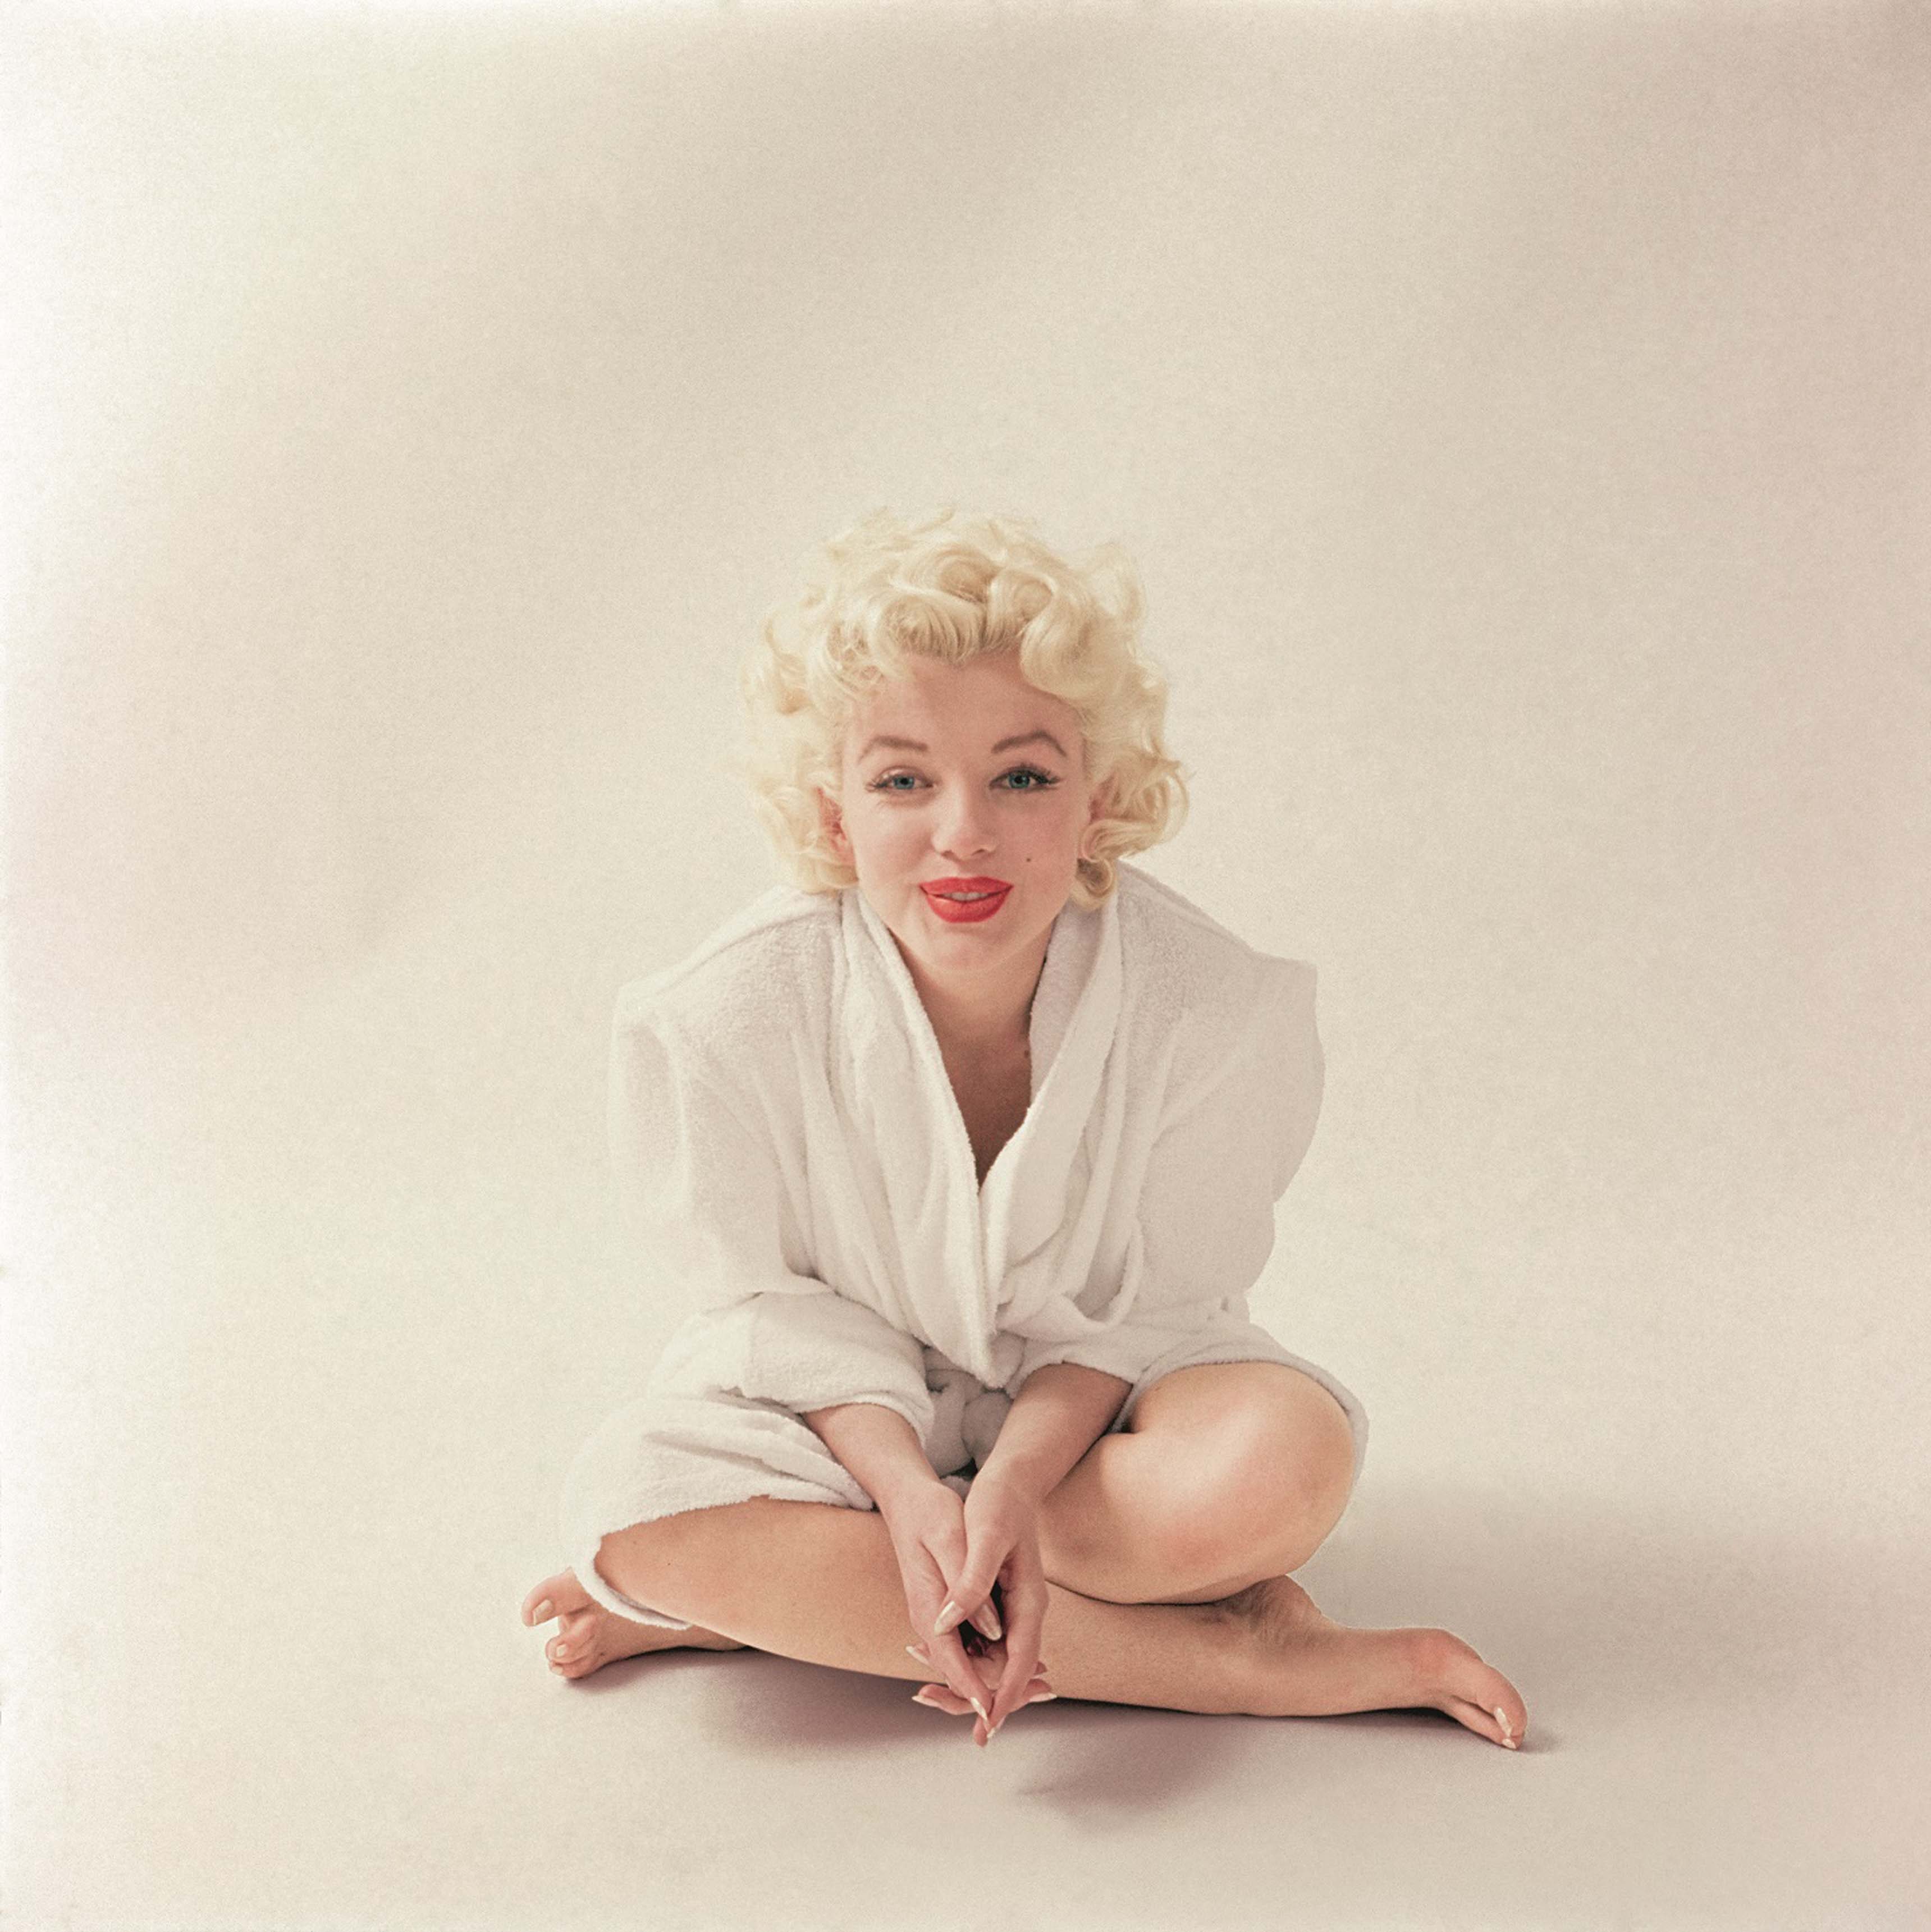 Les dernières images secrètes de Marilyn Monroe. Photographed by Milton H. Greene - The Essential Marilyn Monroe, published by ACC Editions ©2017 Joshua